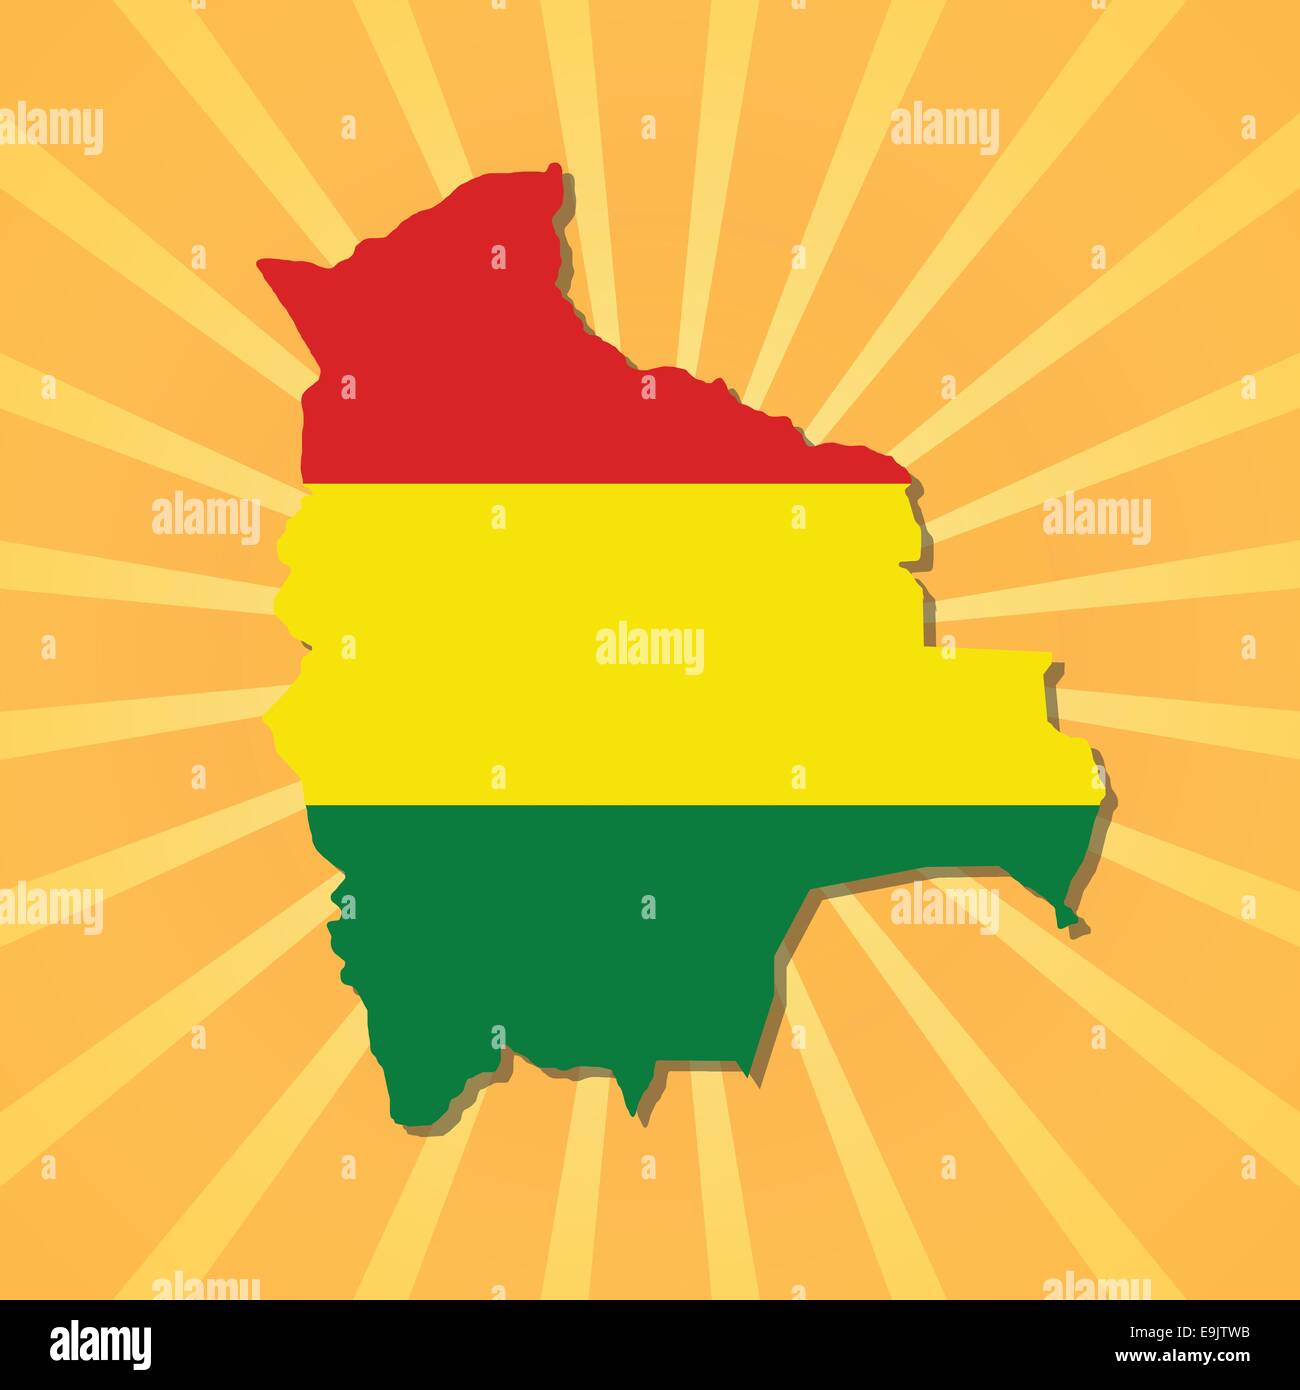 Bolivia map flag on sunburst illustration Stock Vector